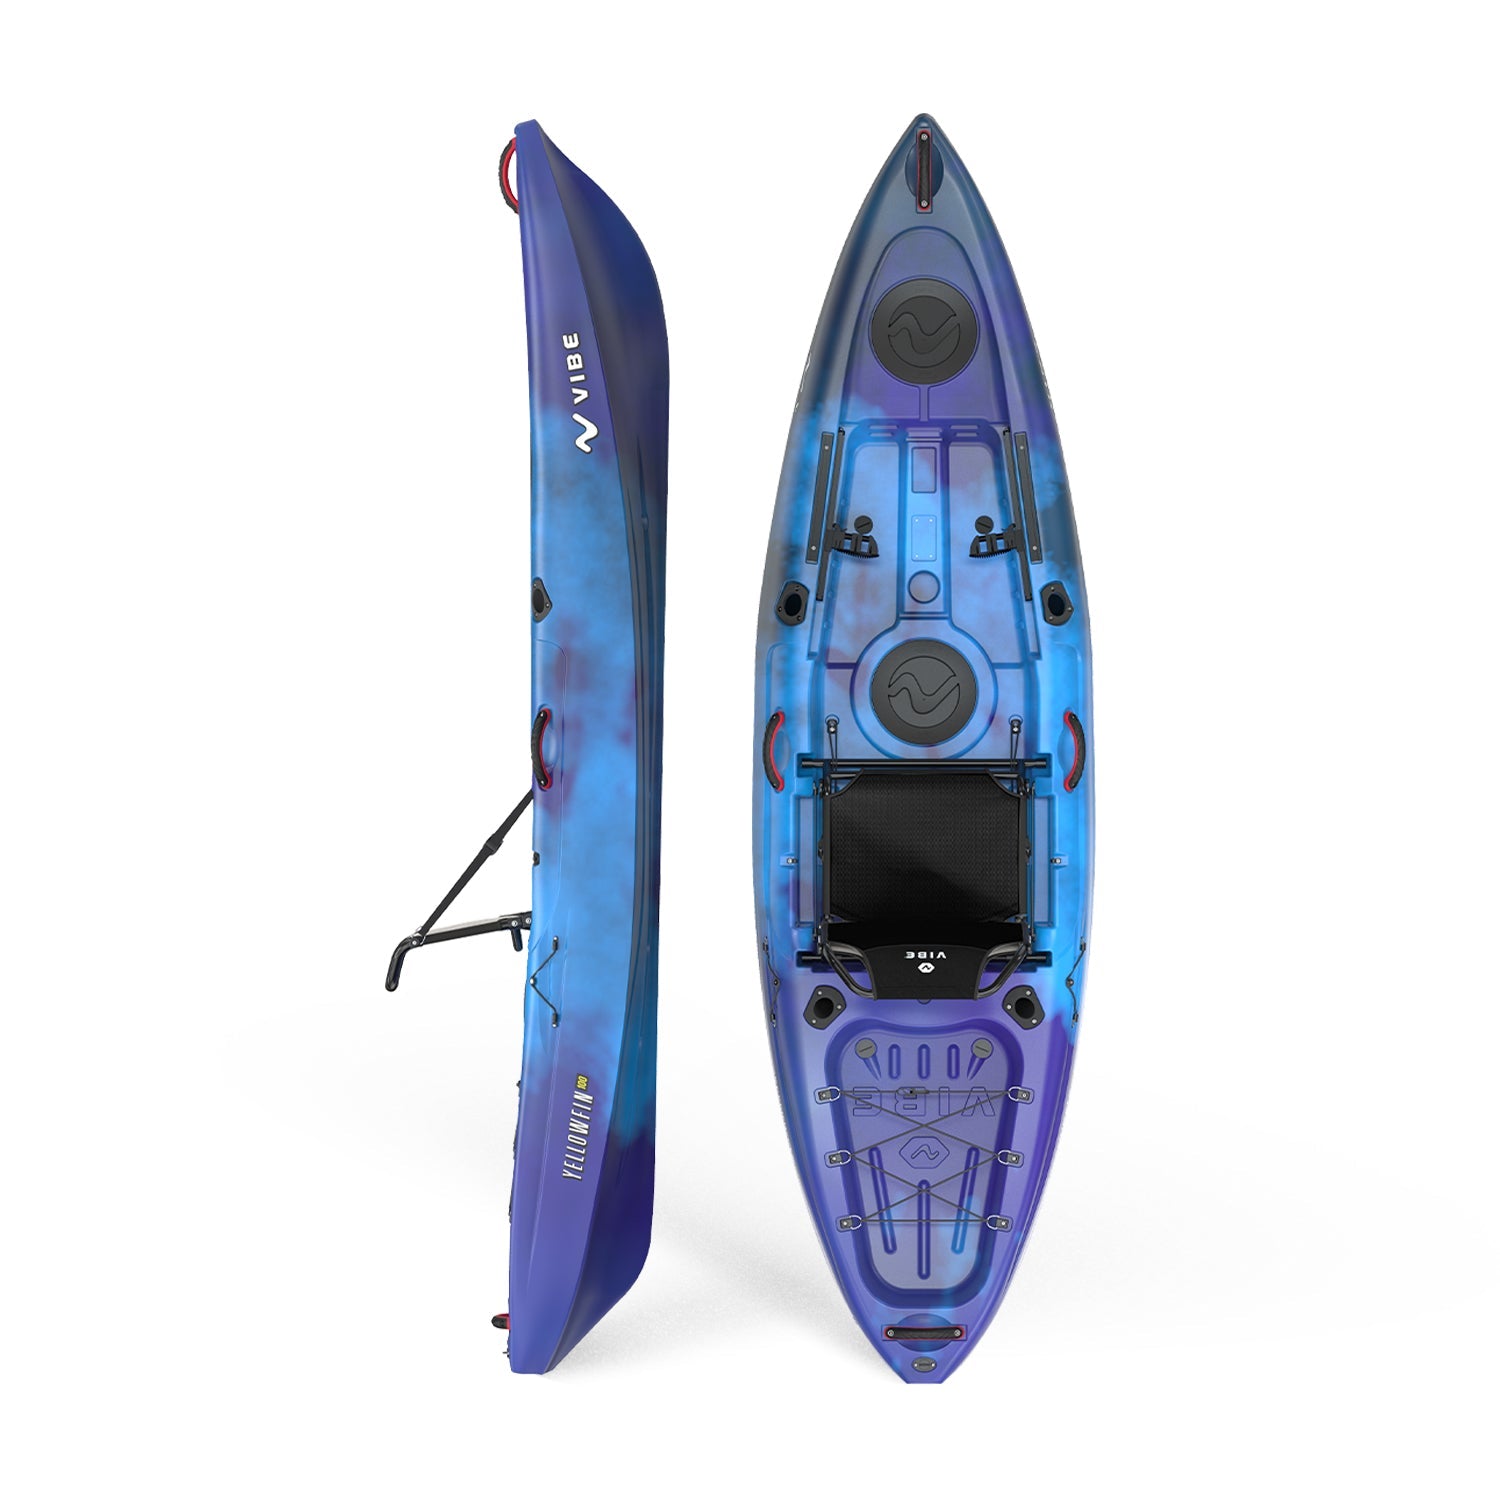  Accesorios De Kayak - Kayak Accessories / Kayaking Equipment:  Sports & Outdoors